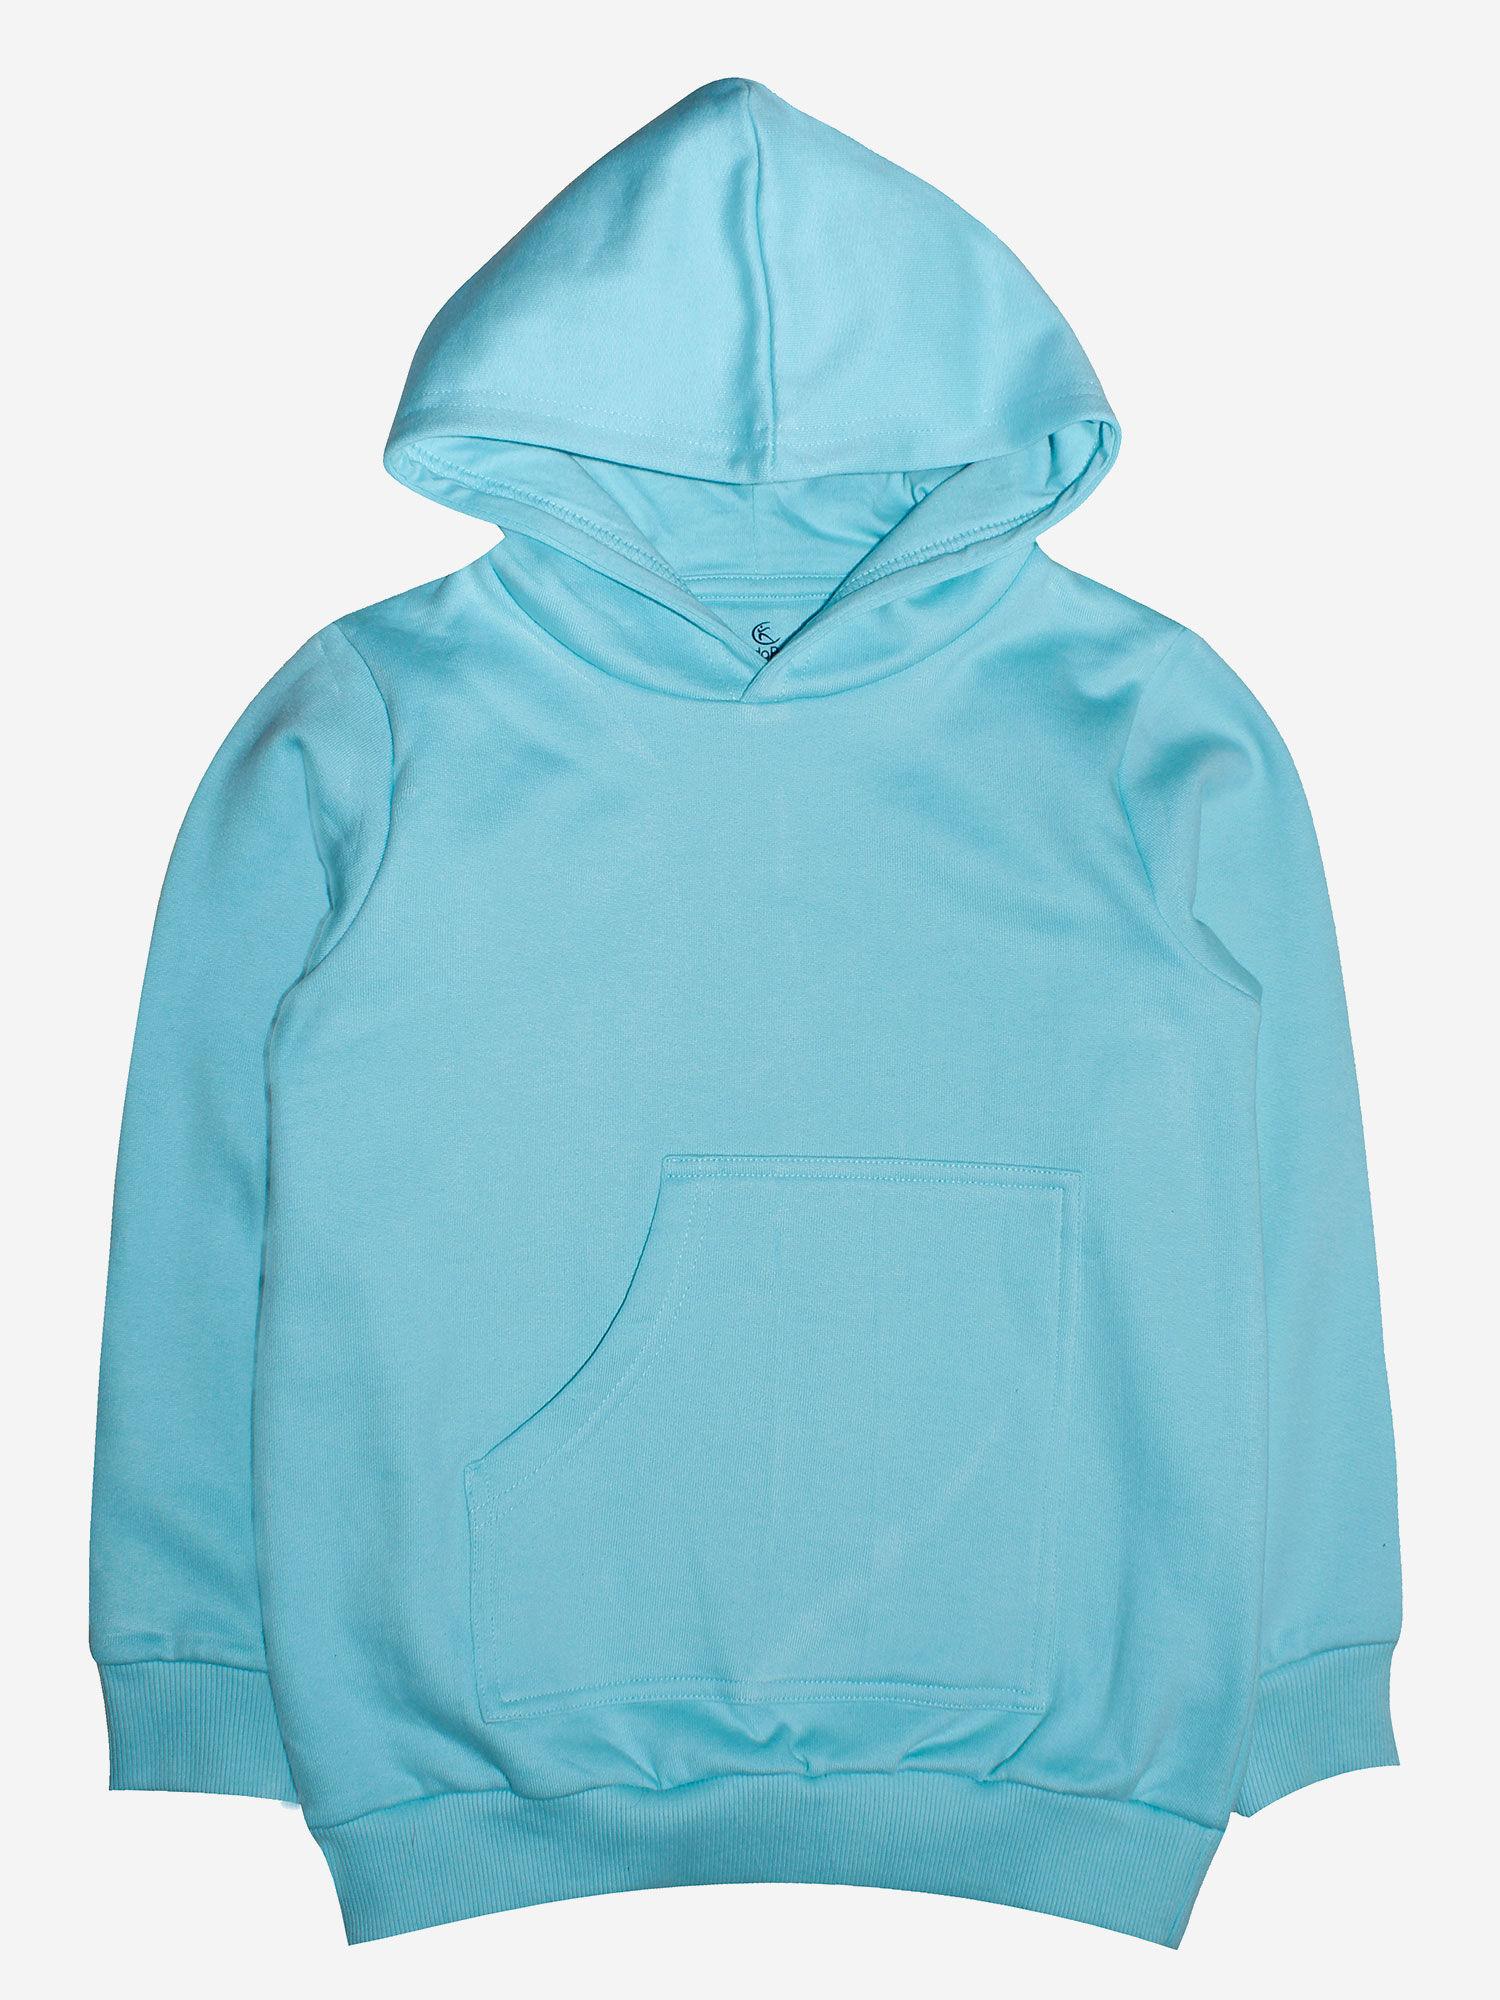 aqua blue solid hooded pull over sweatshirt